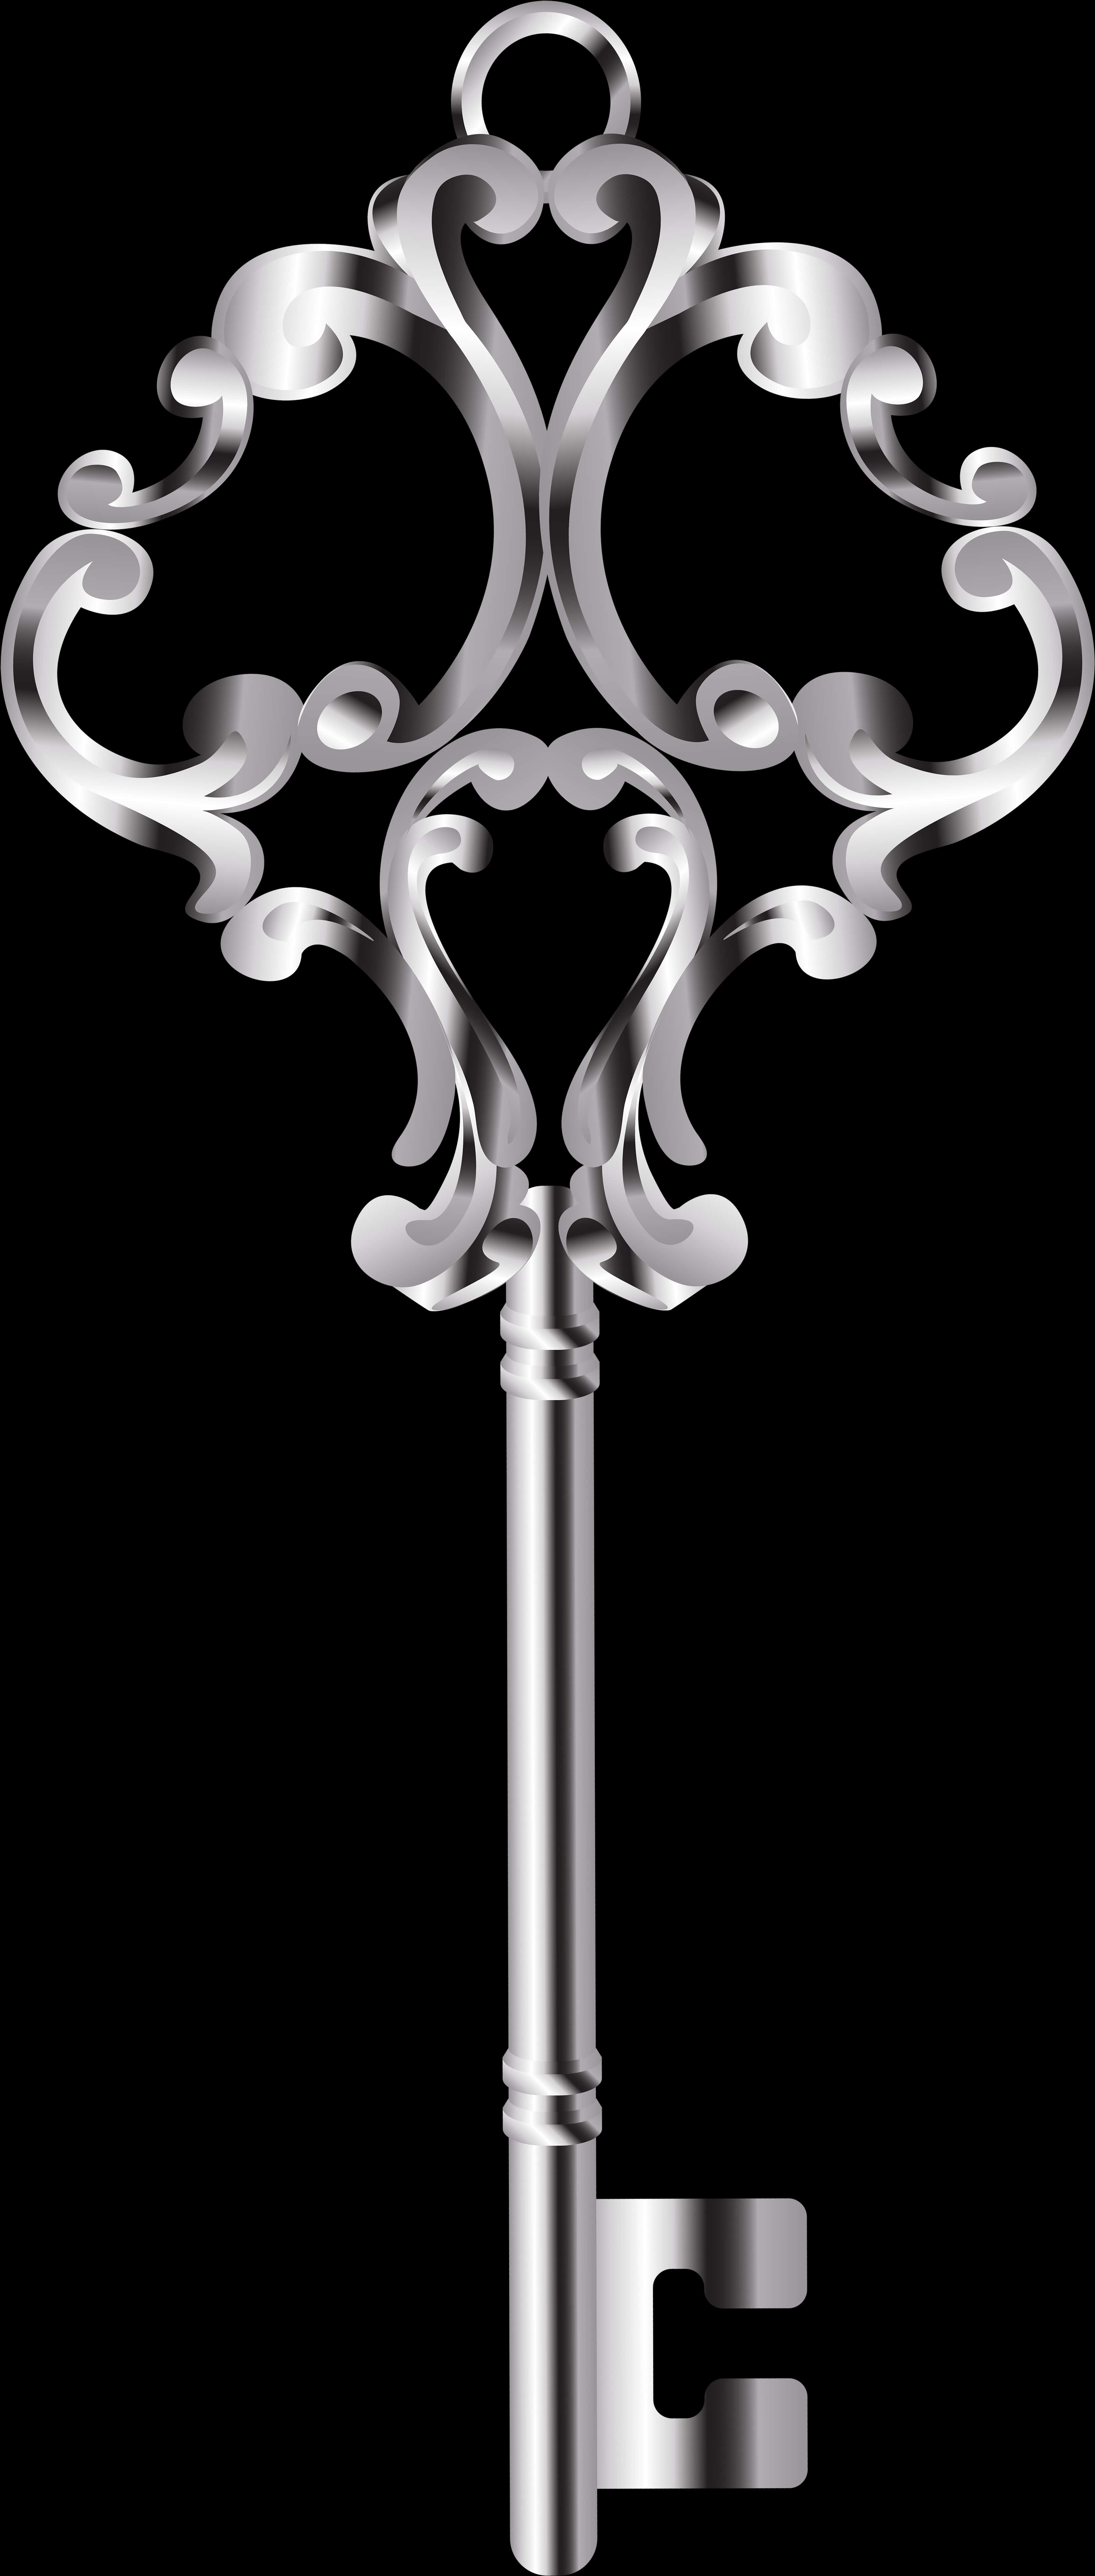 Ornate Silver Key Graphic